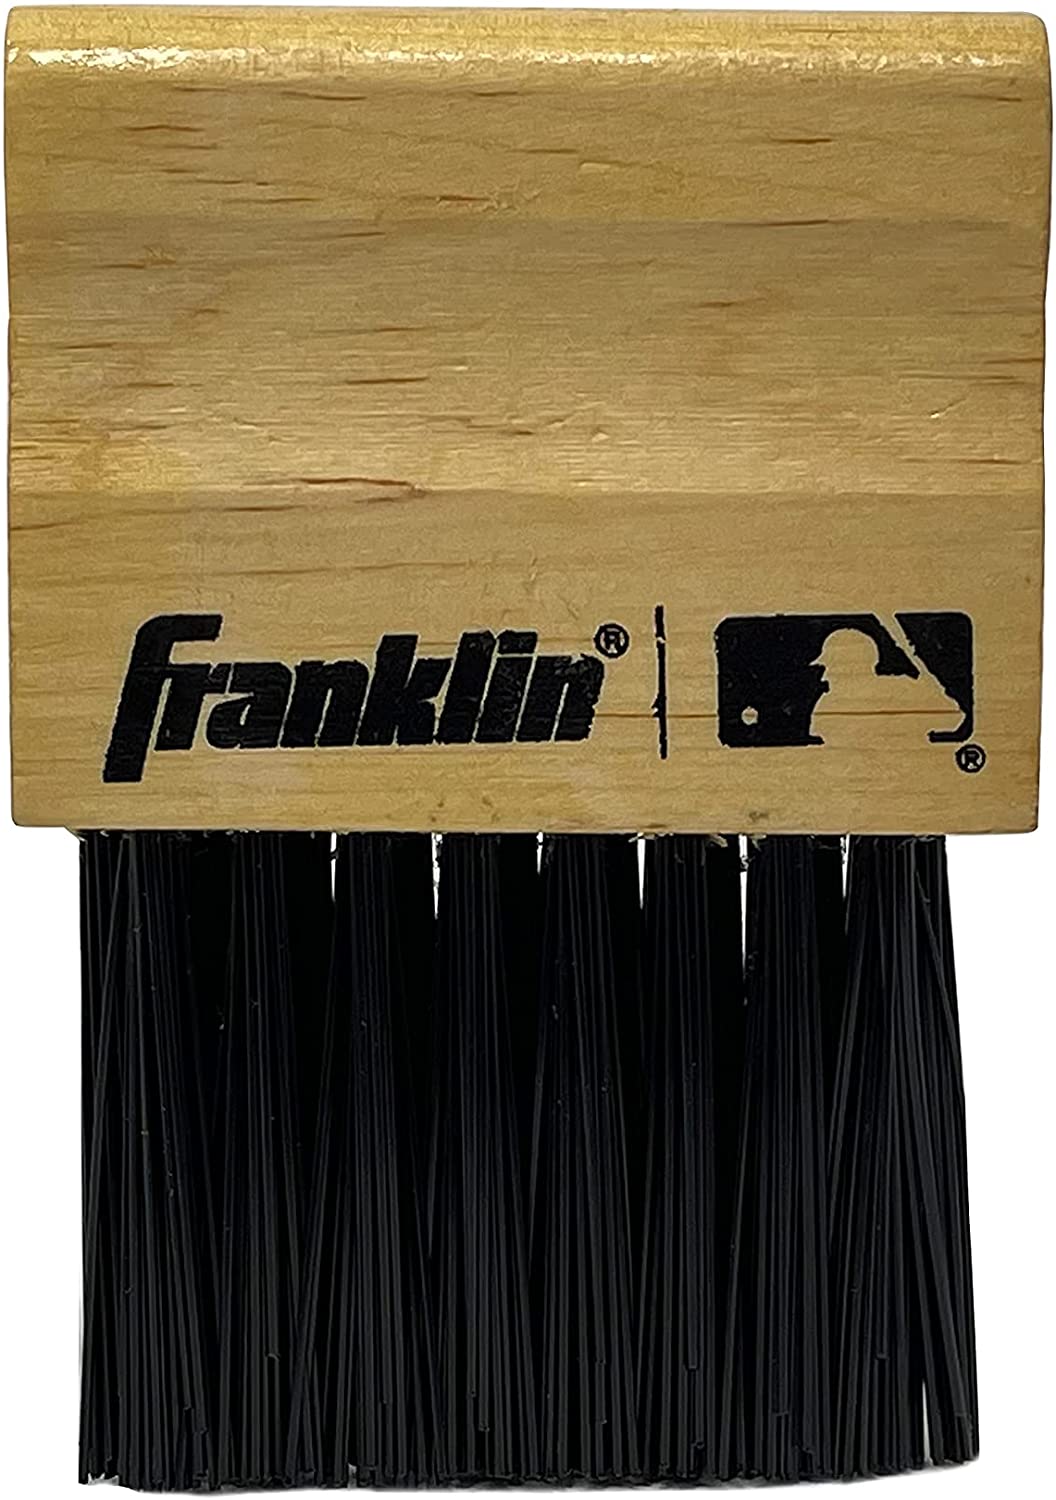 Franklin MLB® Schiedsrichter Pinsel